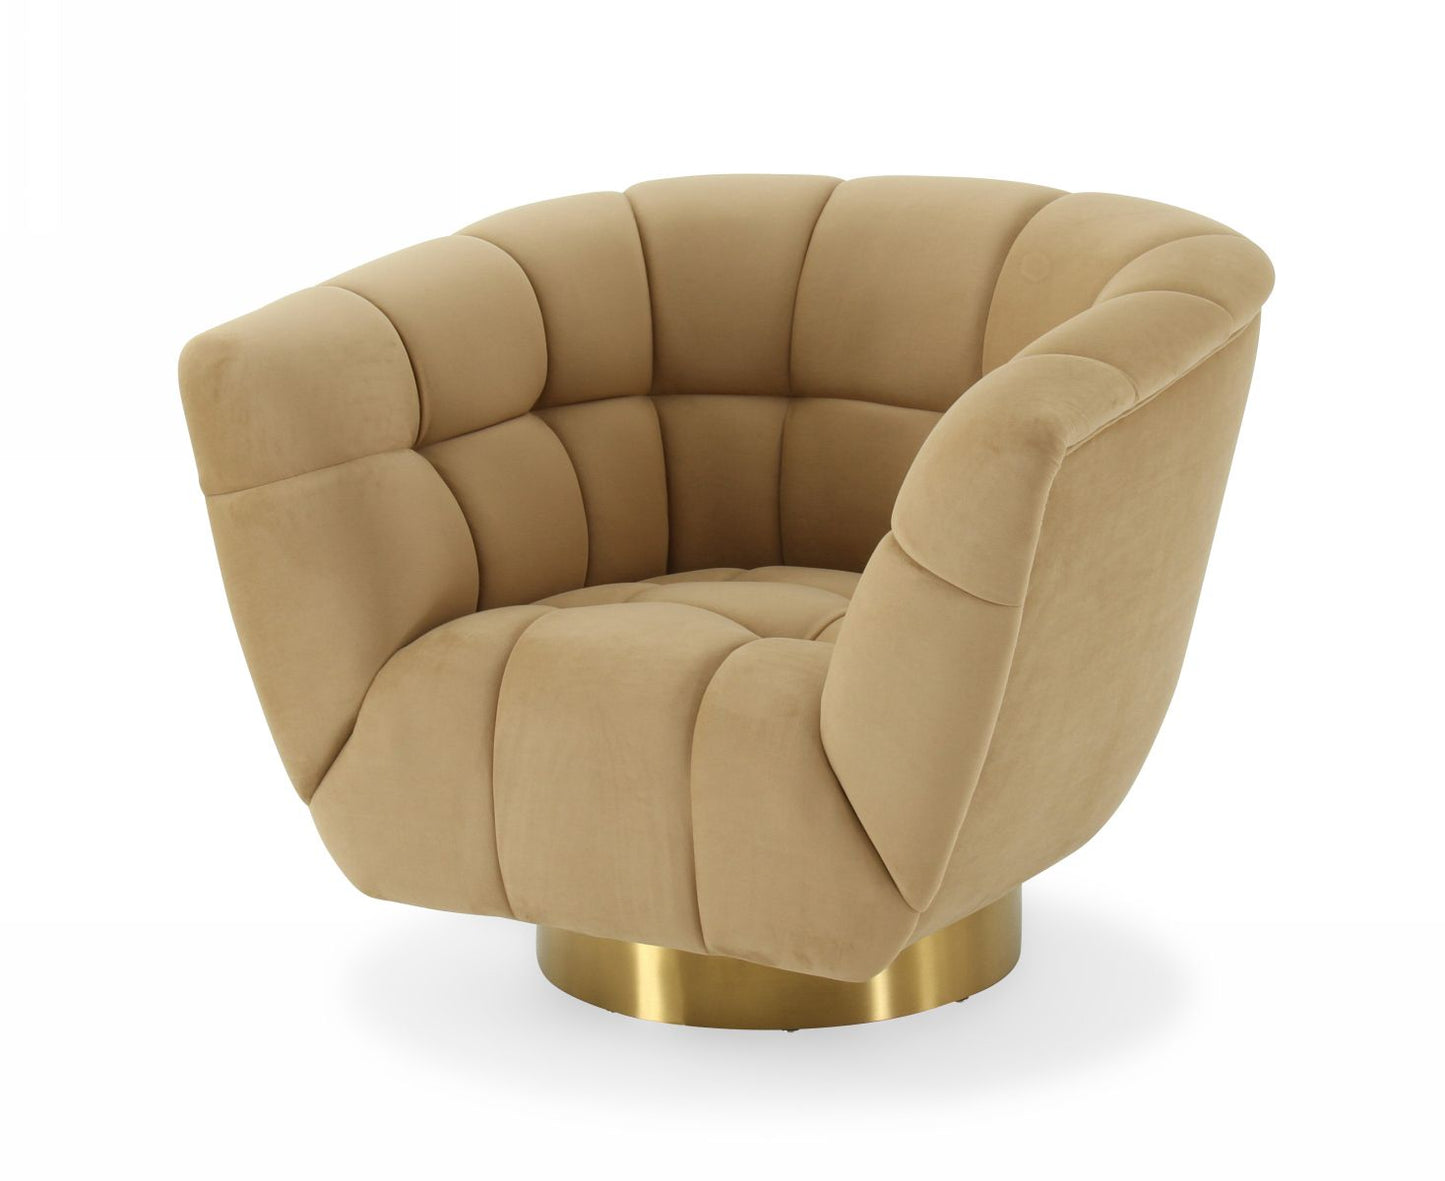 Divani Casa Granby - Glam Mustard and Gold Fabric Chair